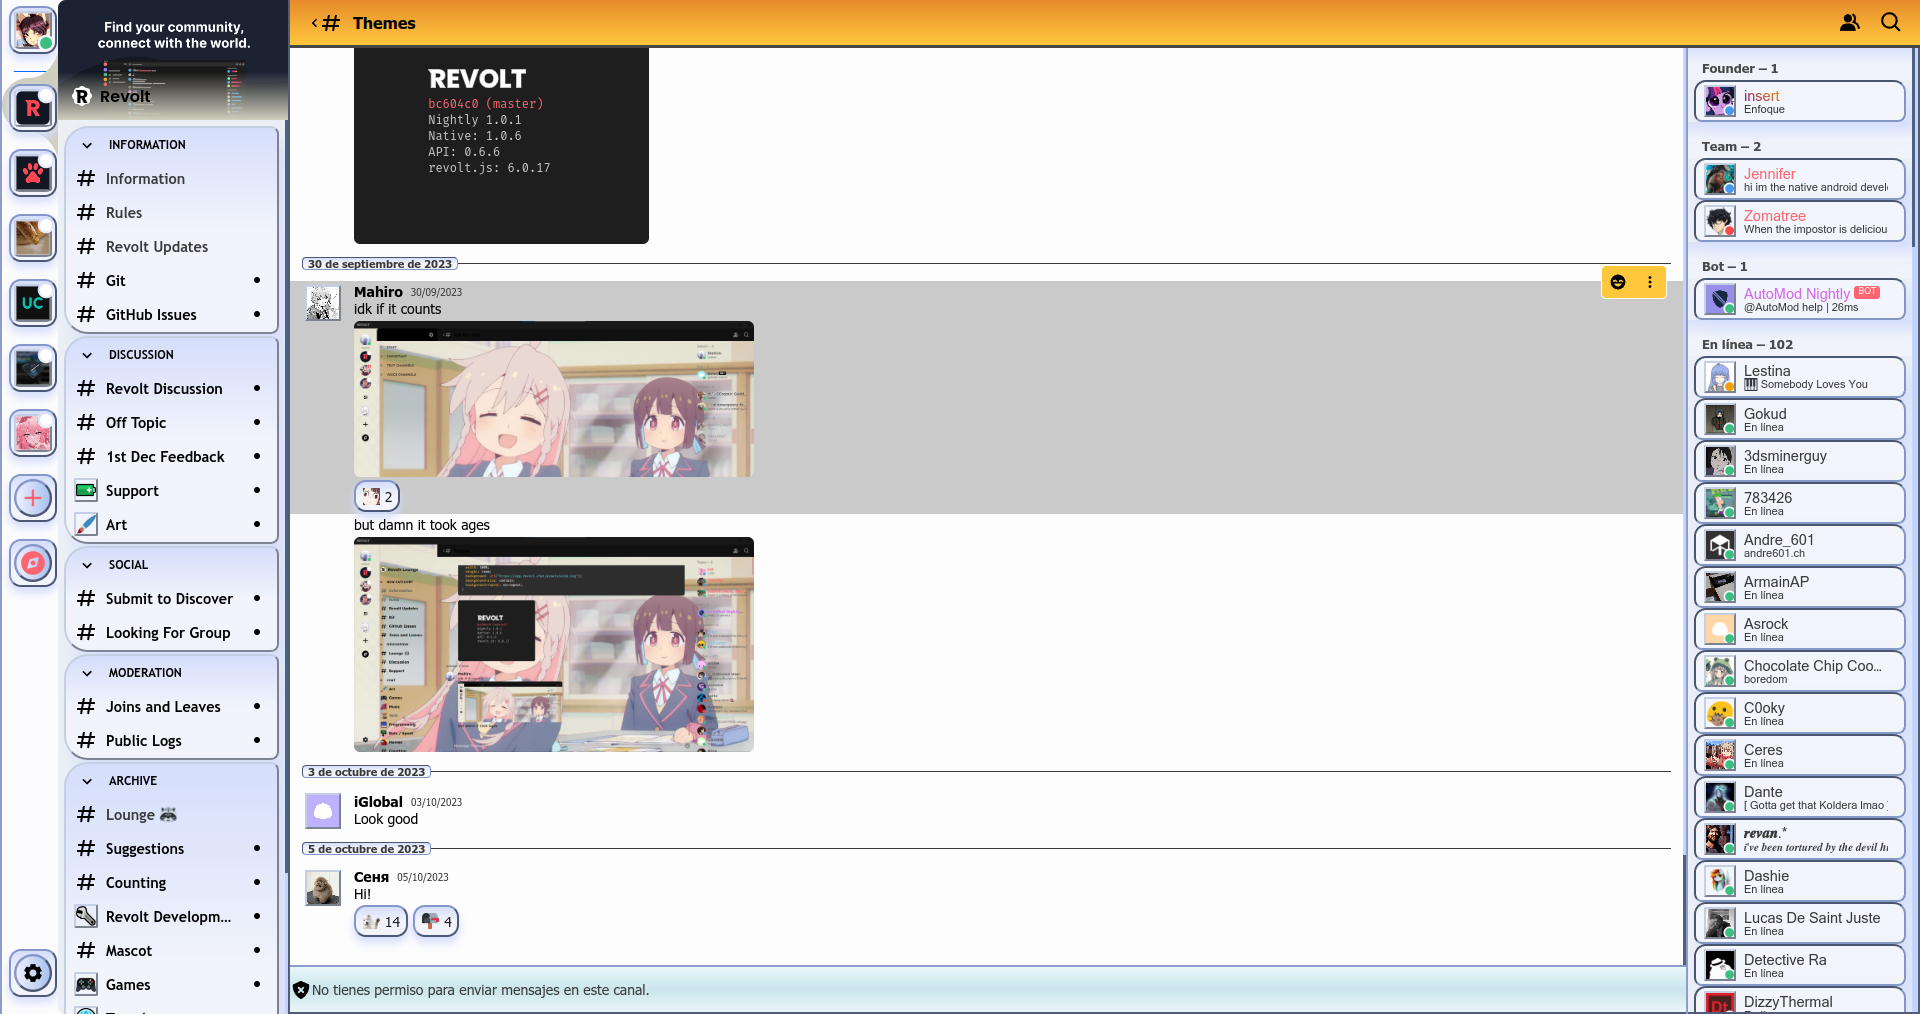 Screenshot of the MSN Messenger-inspired Revolt theme I've been working on